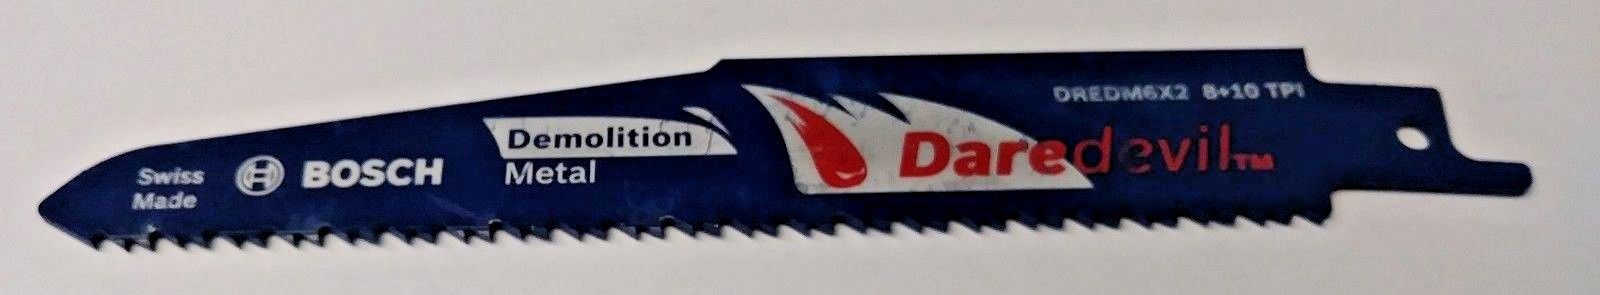 Bosch Daredevil DREDM6X2 6" x 8+10 TPI Metal Demolition Reciprocating Saw Blade